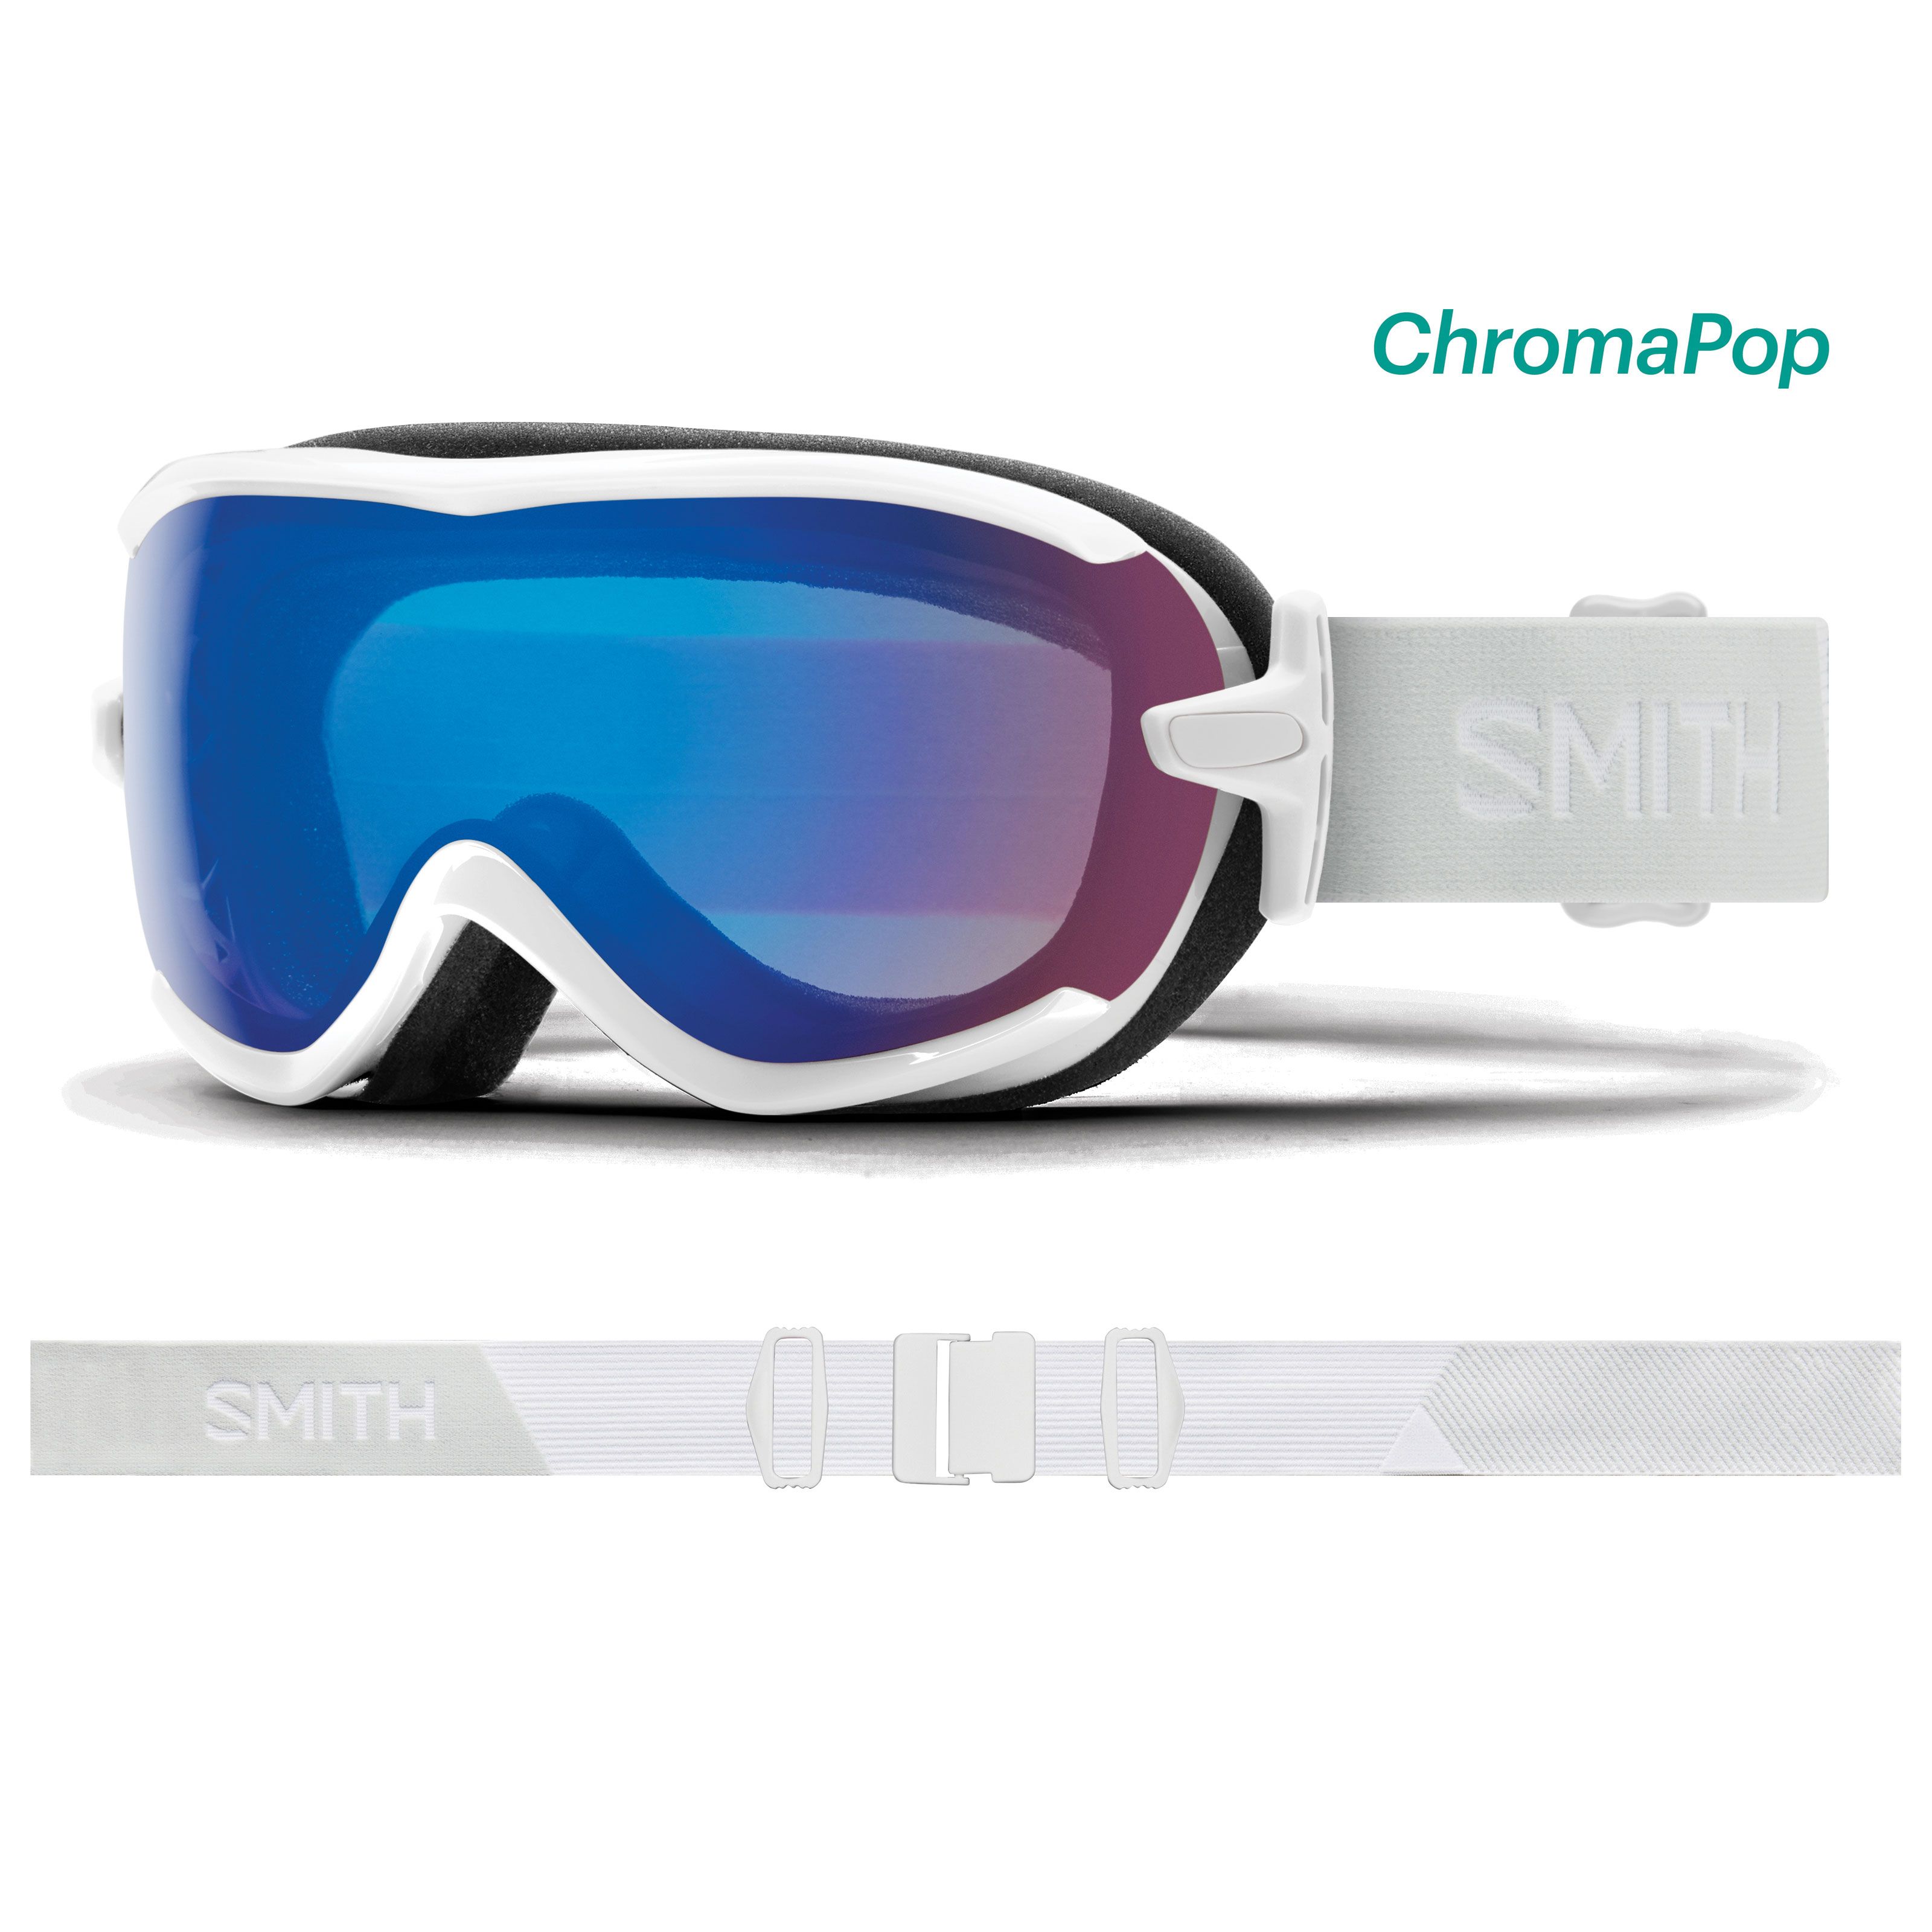 Masque de Ski Virtue - White Vapor - ChromaPop Storm Rose Flash